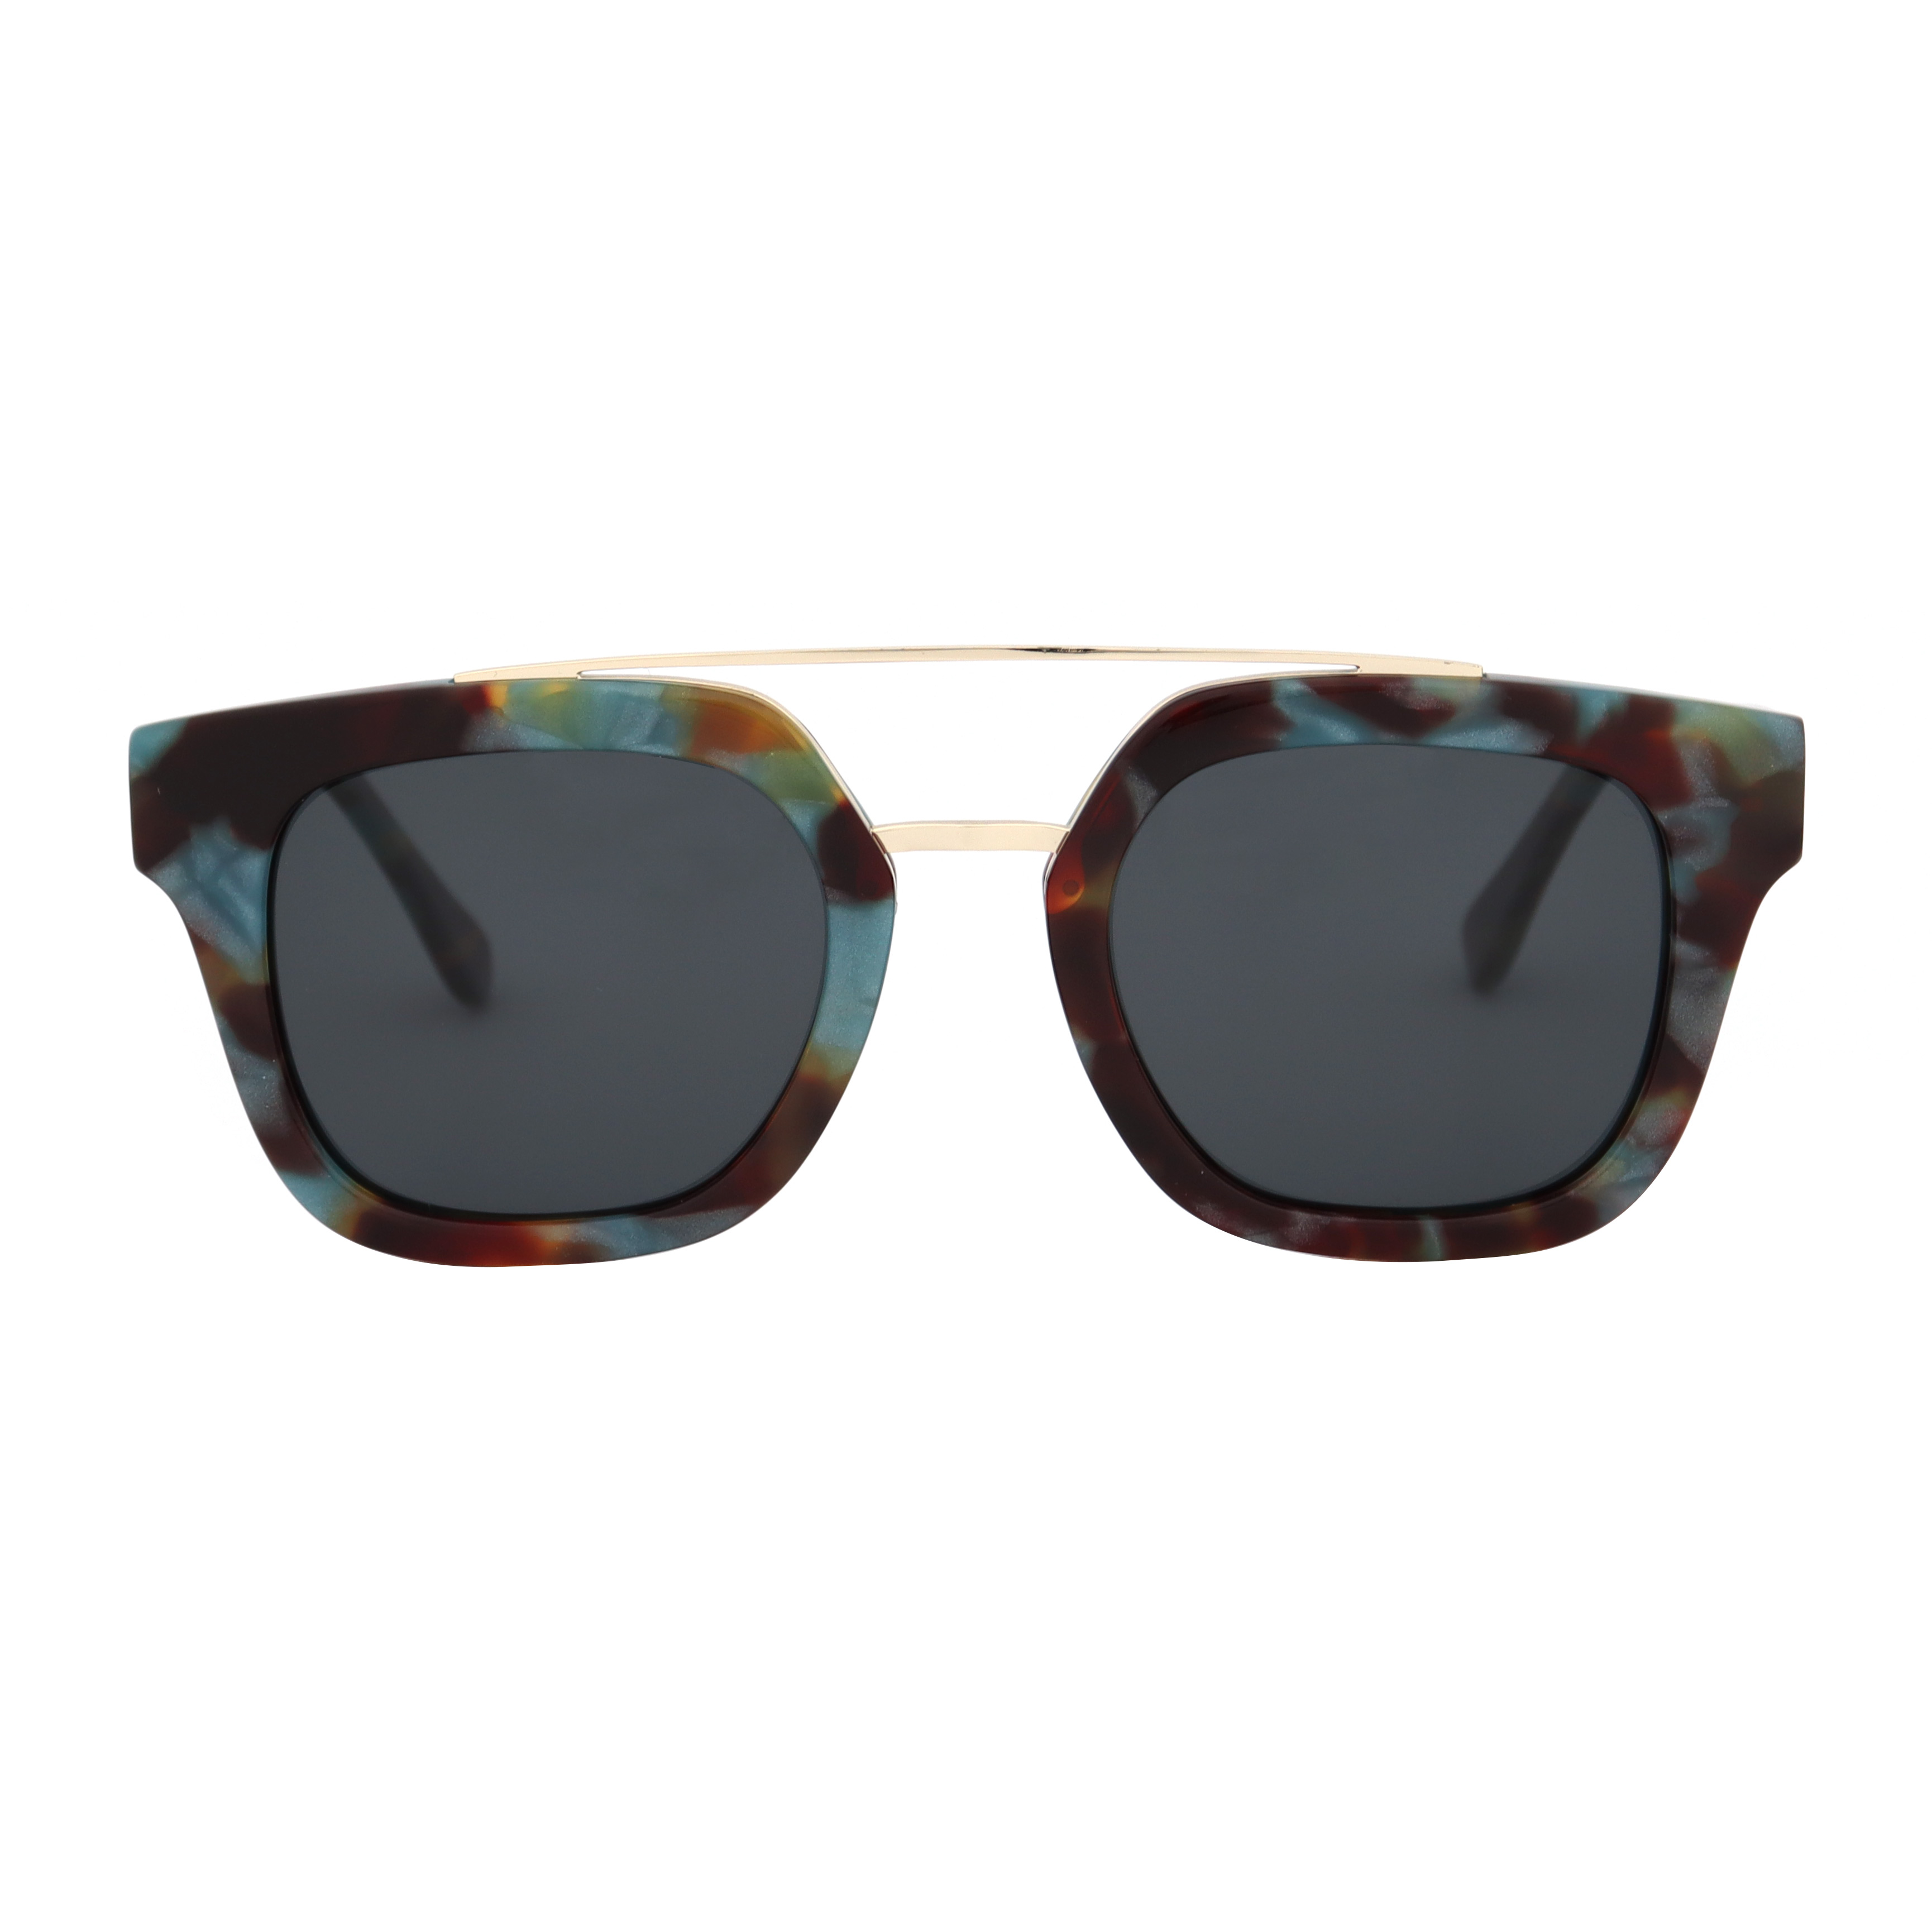 Boldly fashion double bridge acetate sunglasses Featured Image